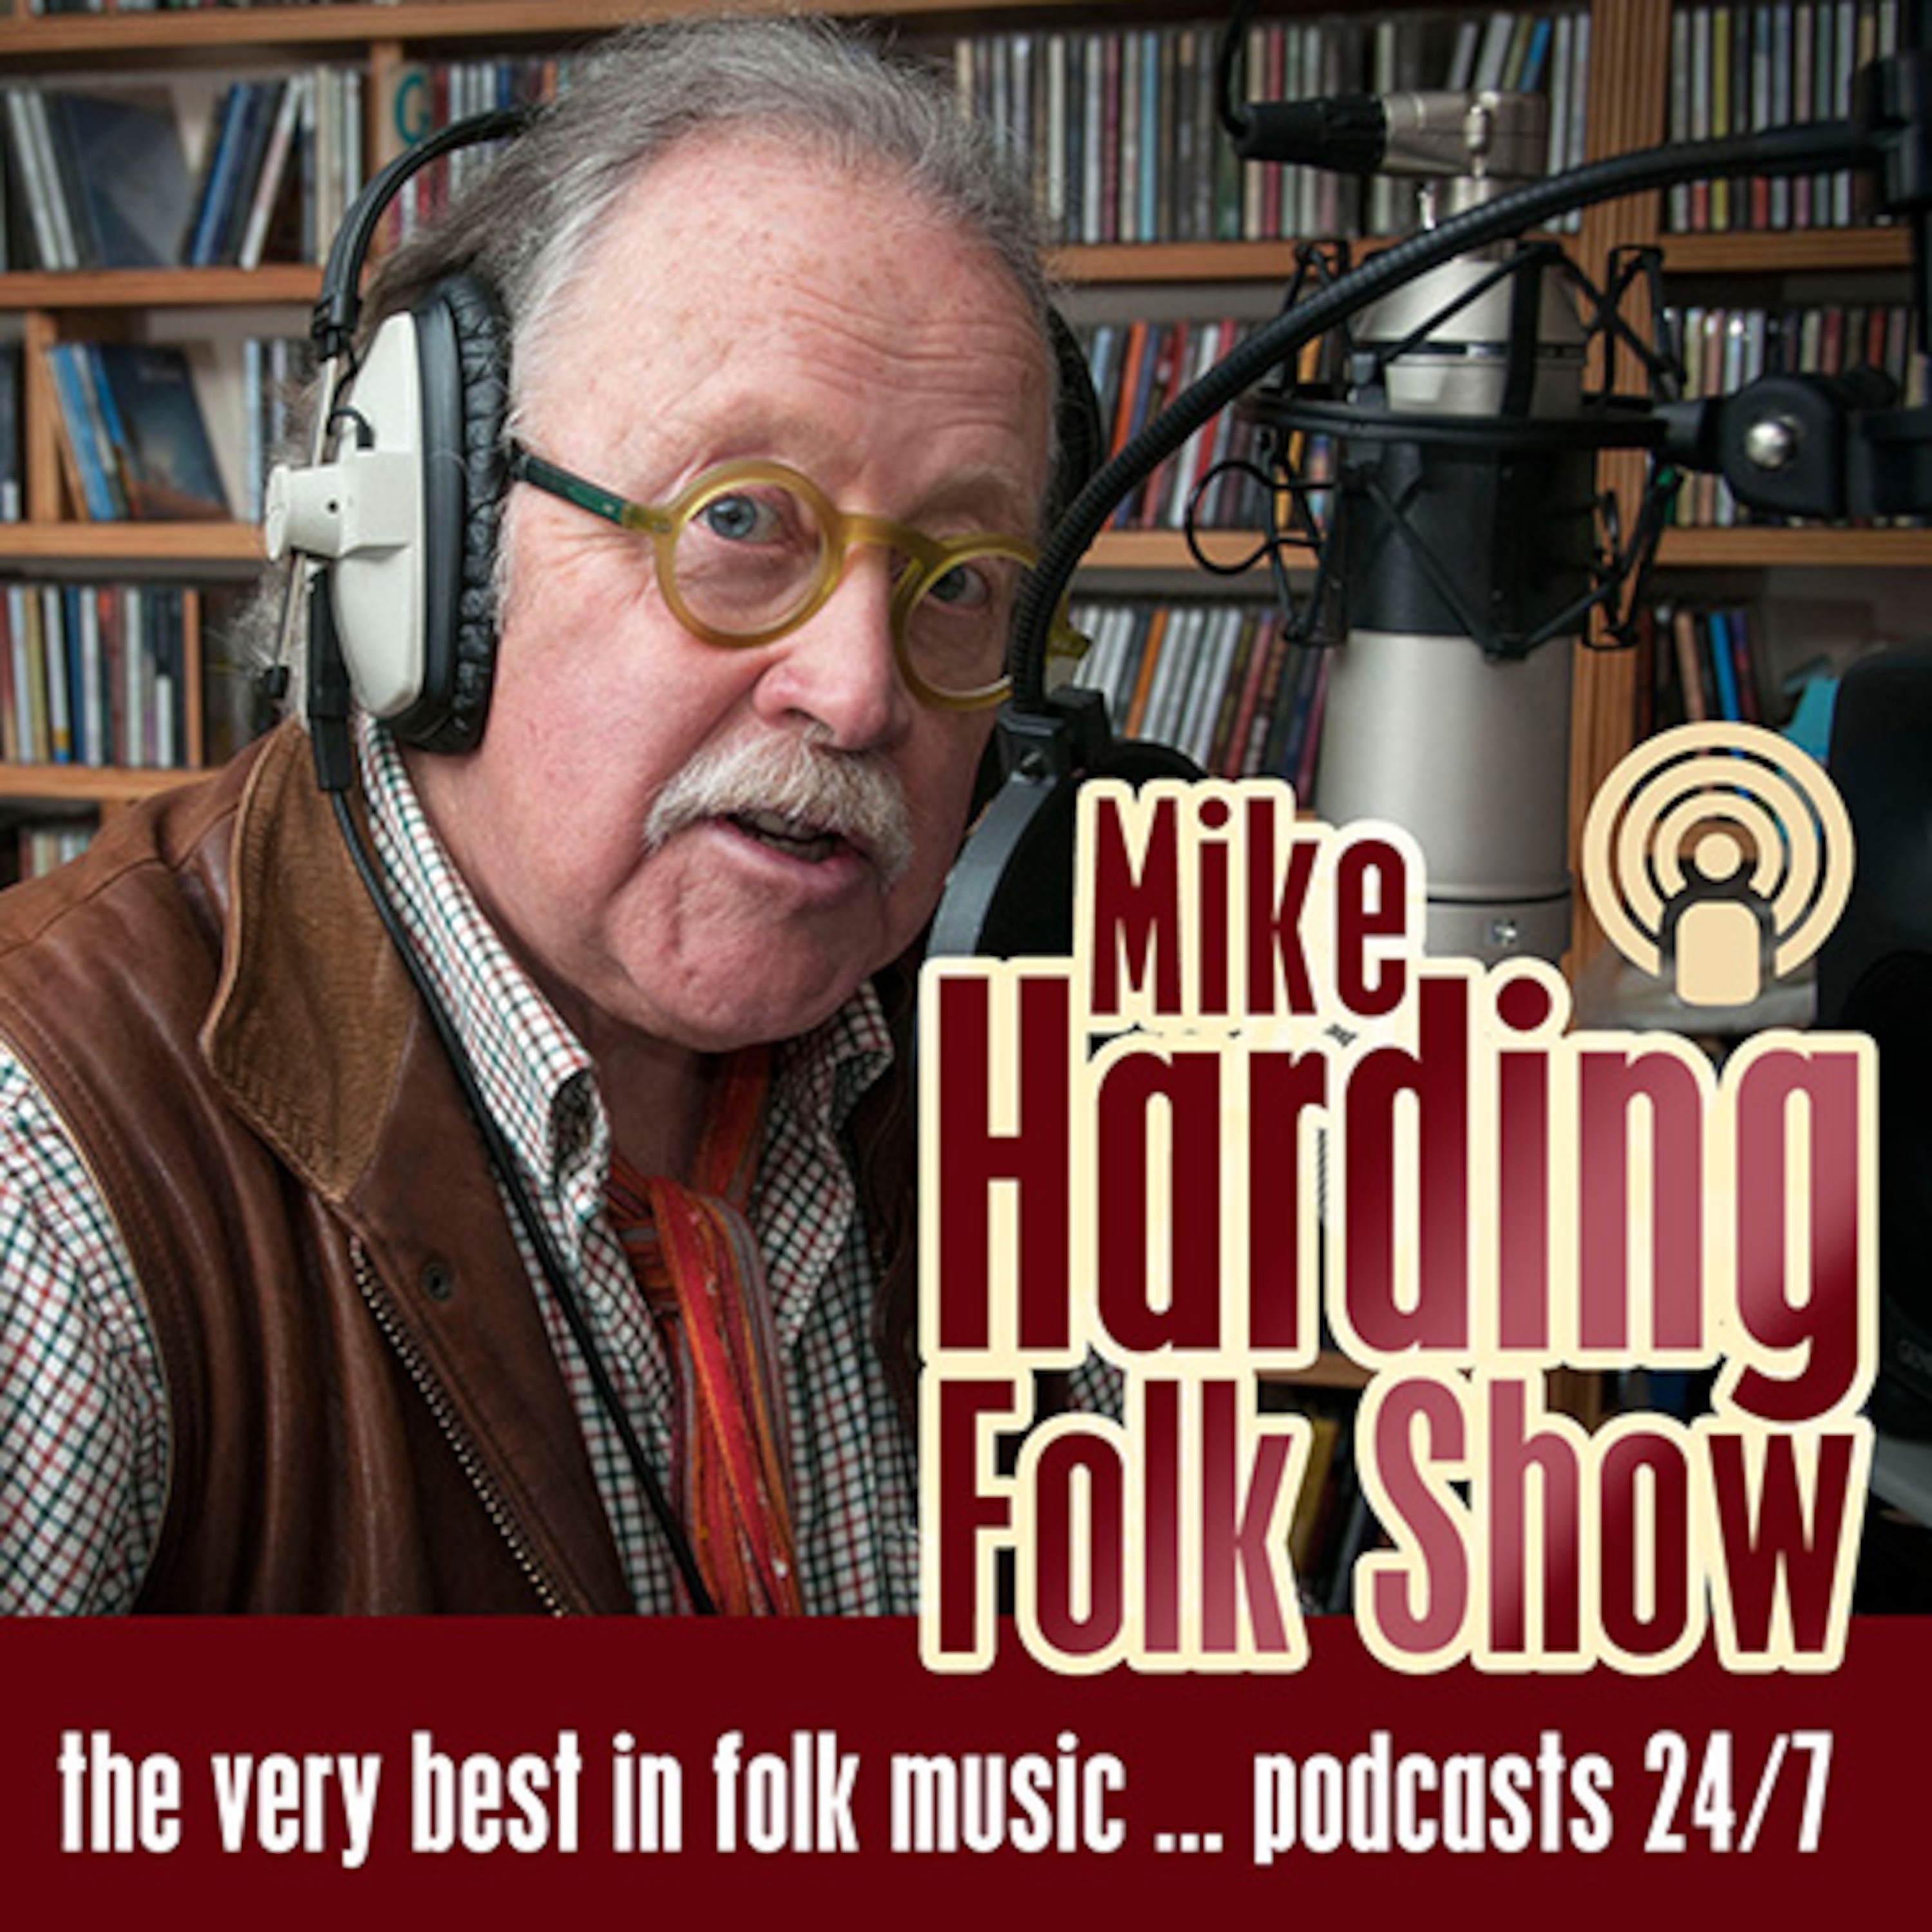 Mike Harding Folk Show 253